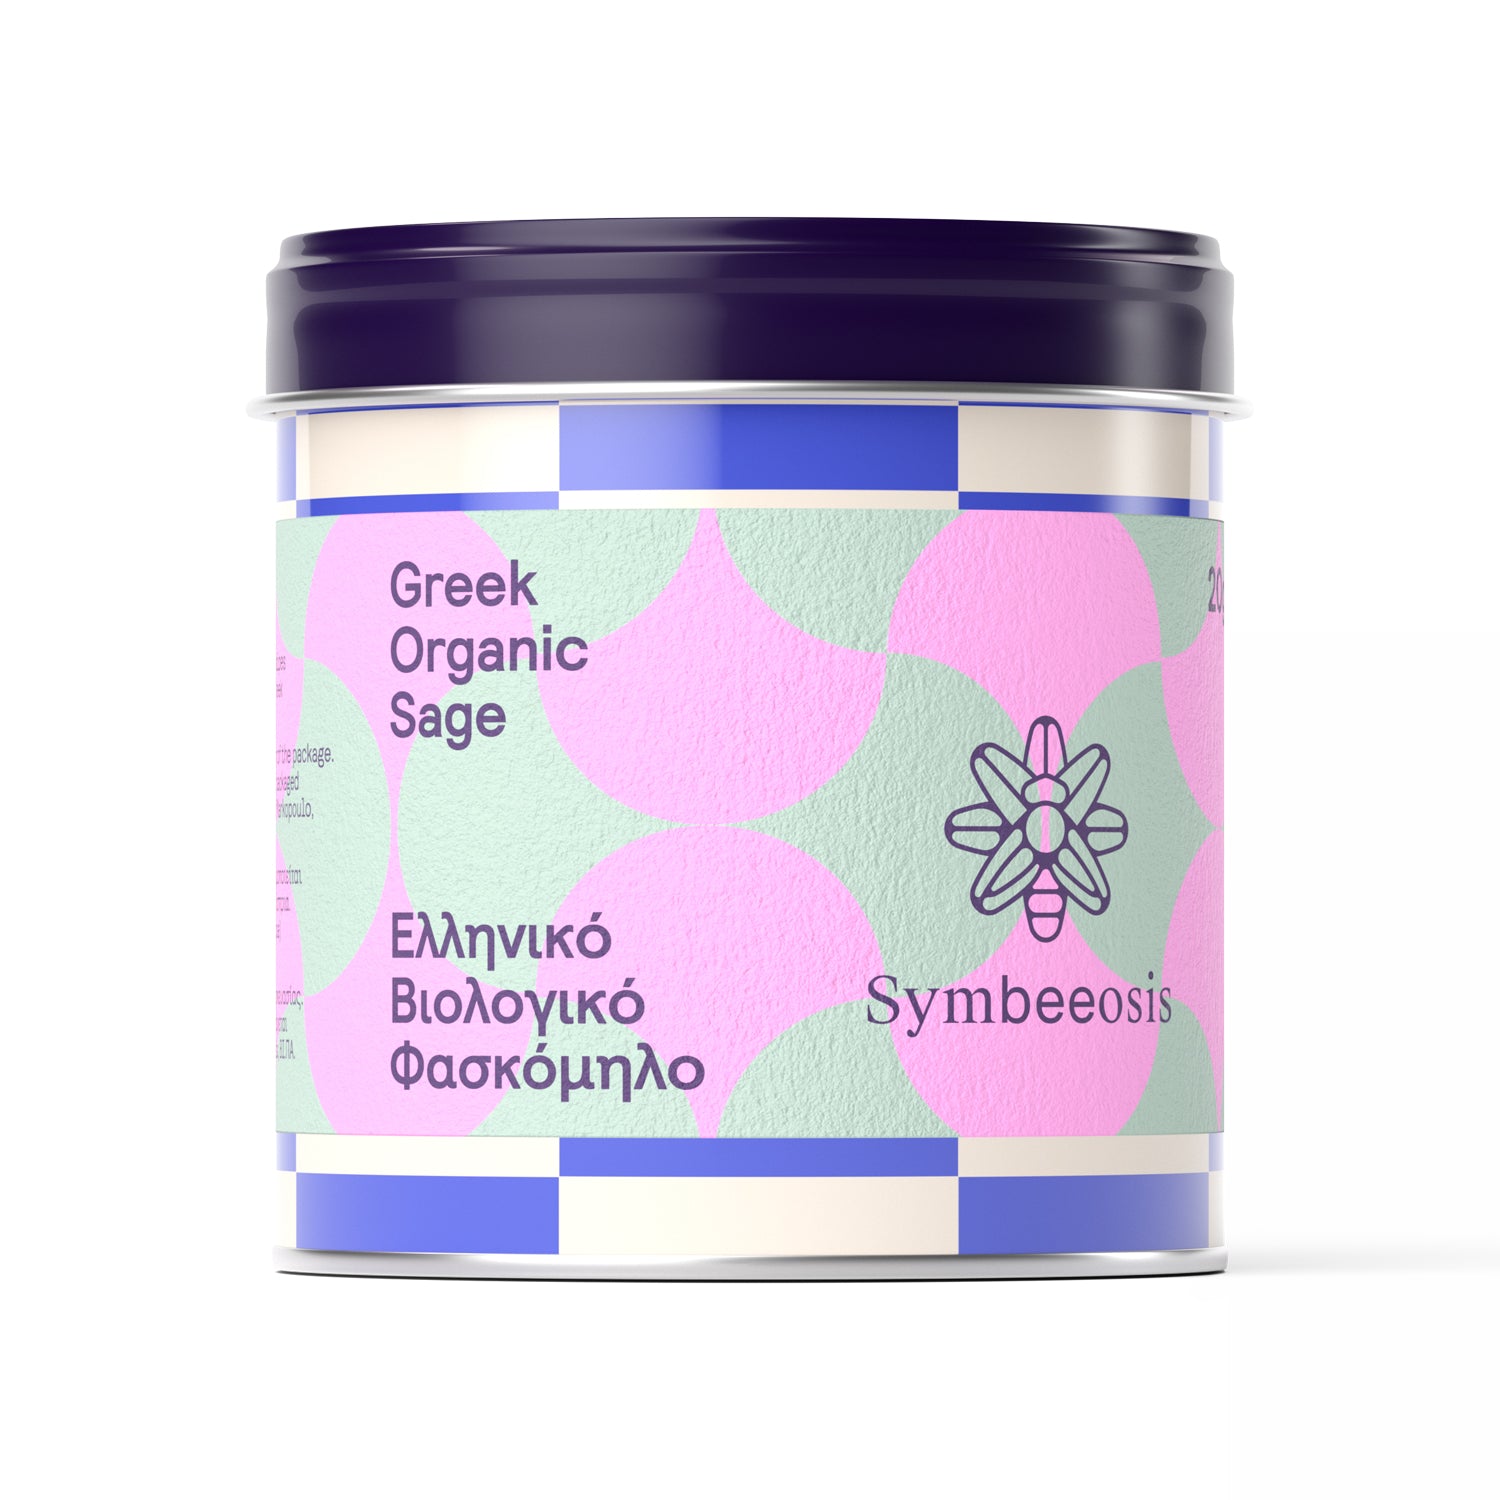 Greek Organic Sage - 20g - Symbeeosis